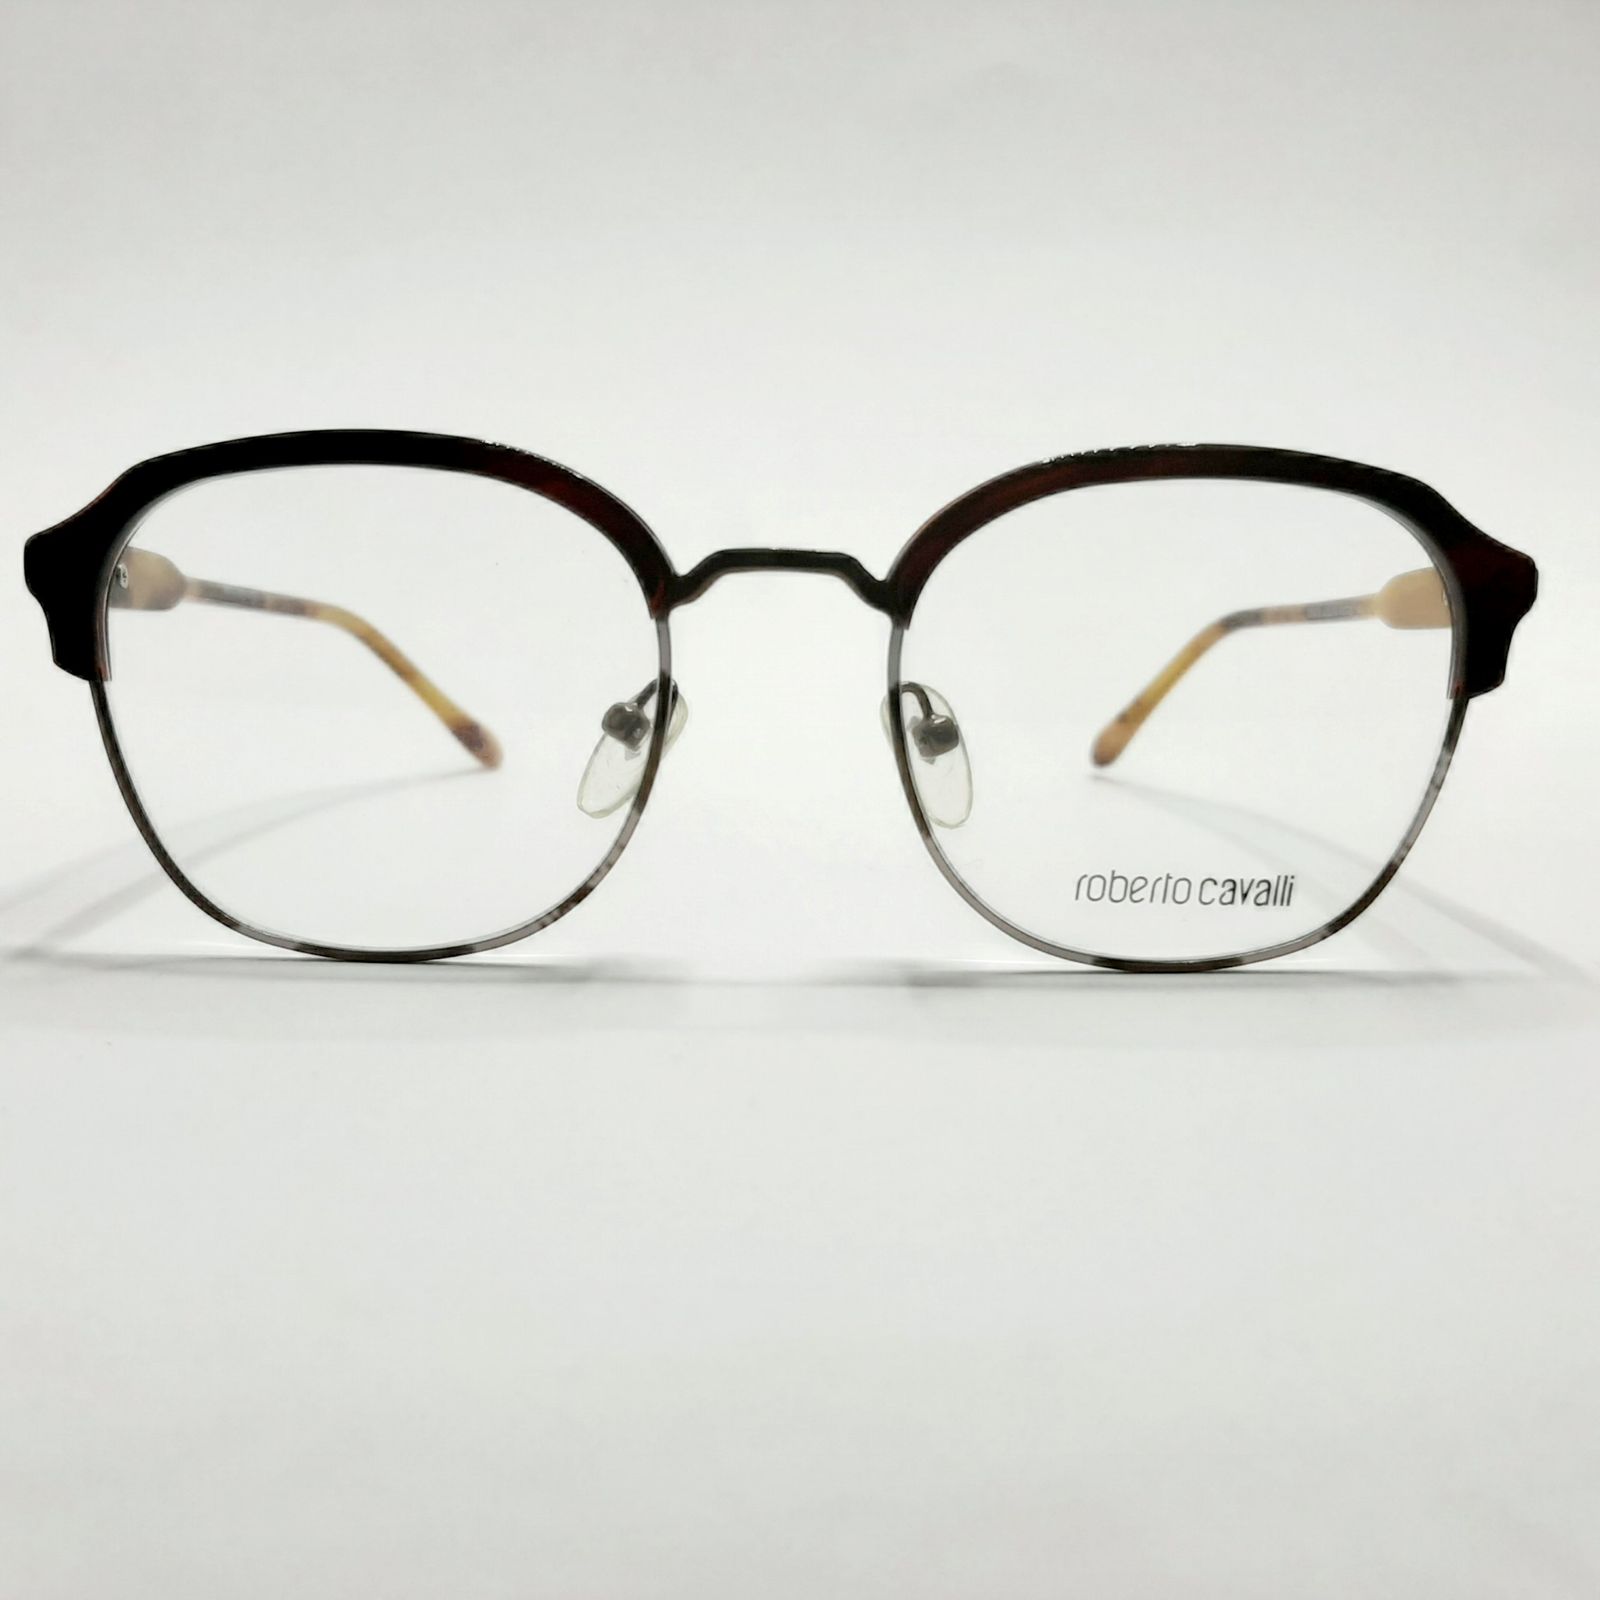 فریم عینک طبی روبرتو کاوالی مدل RC10657Jc7 -  - 2